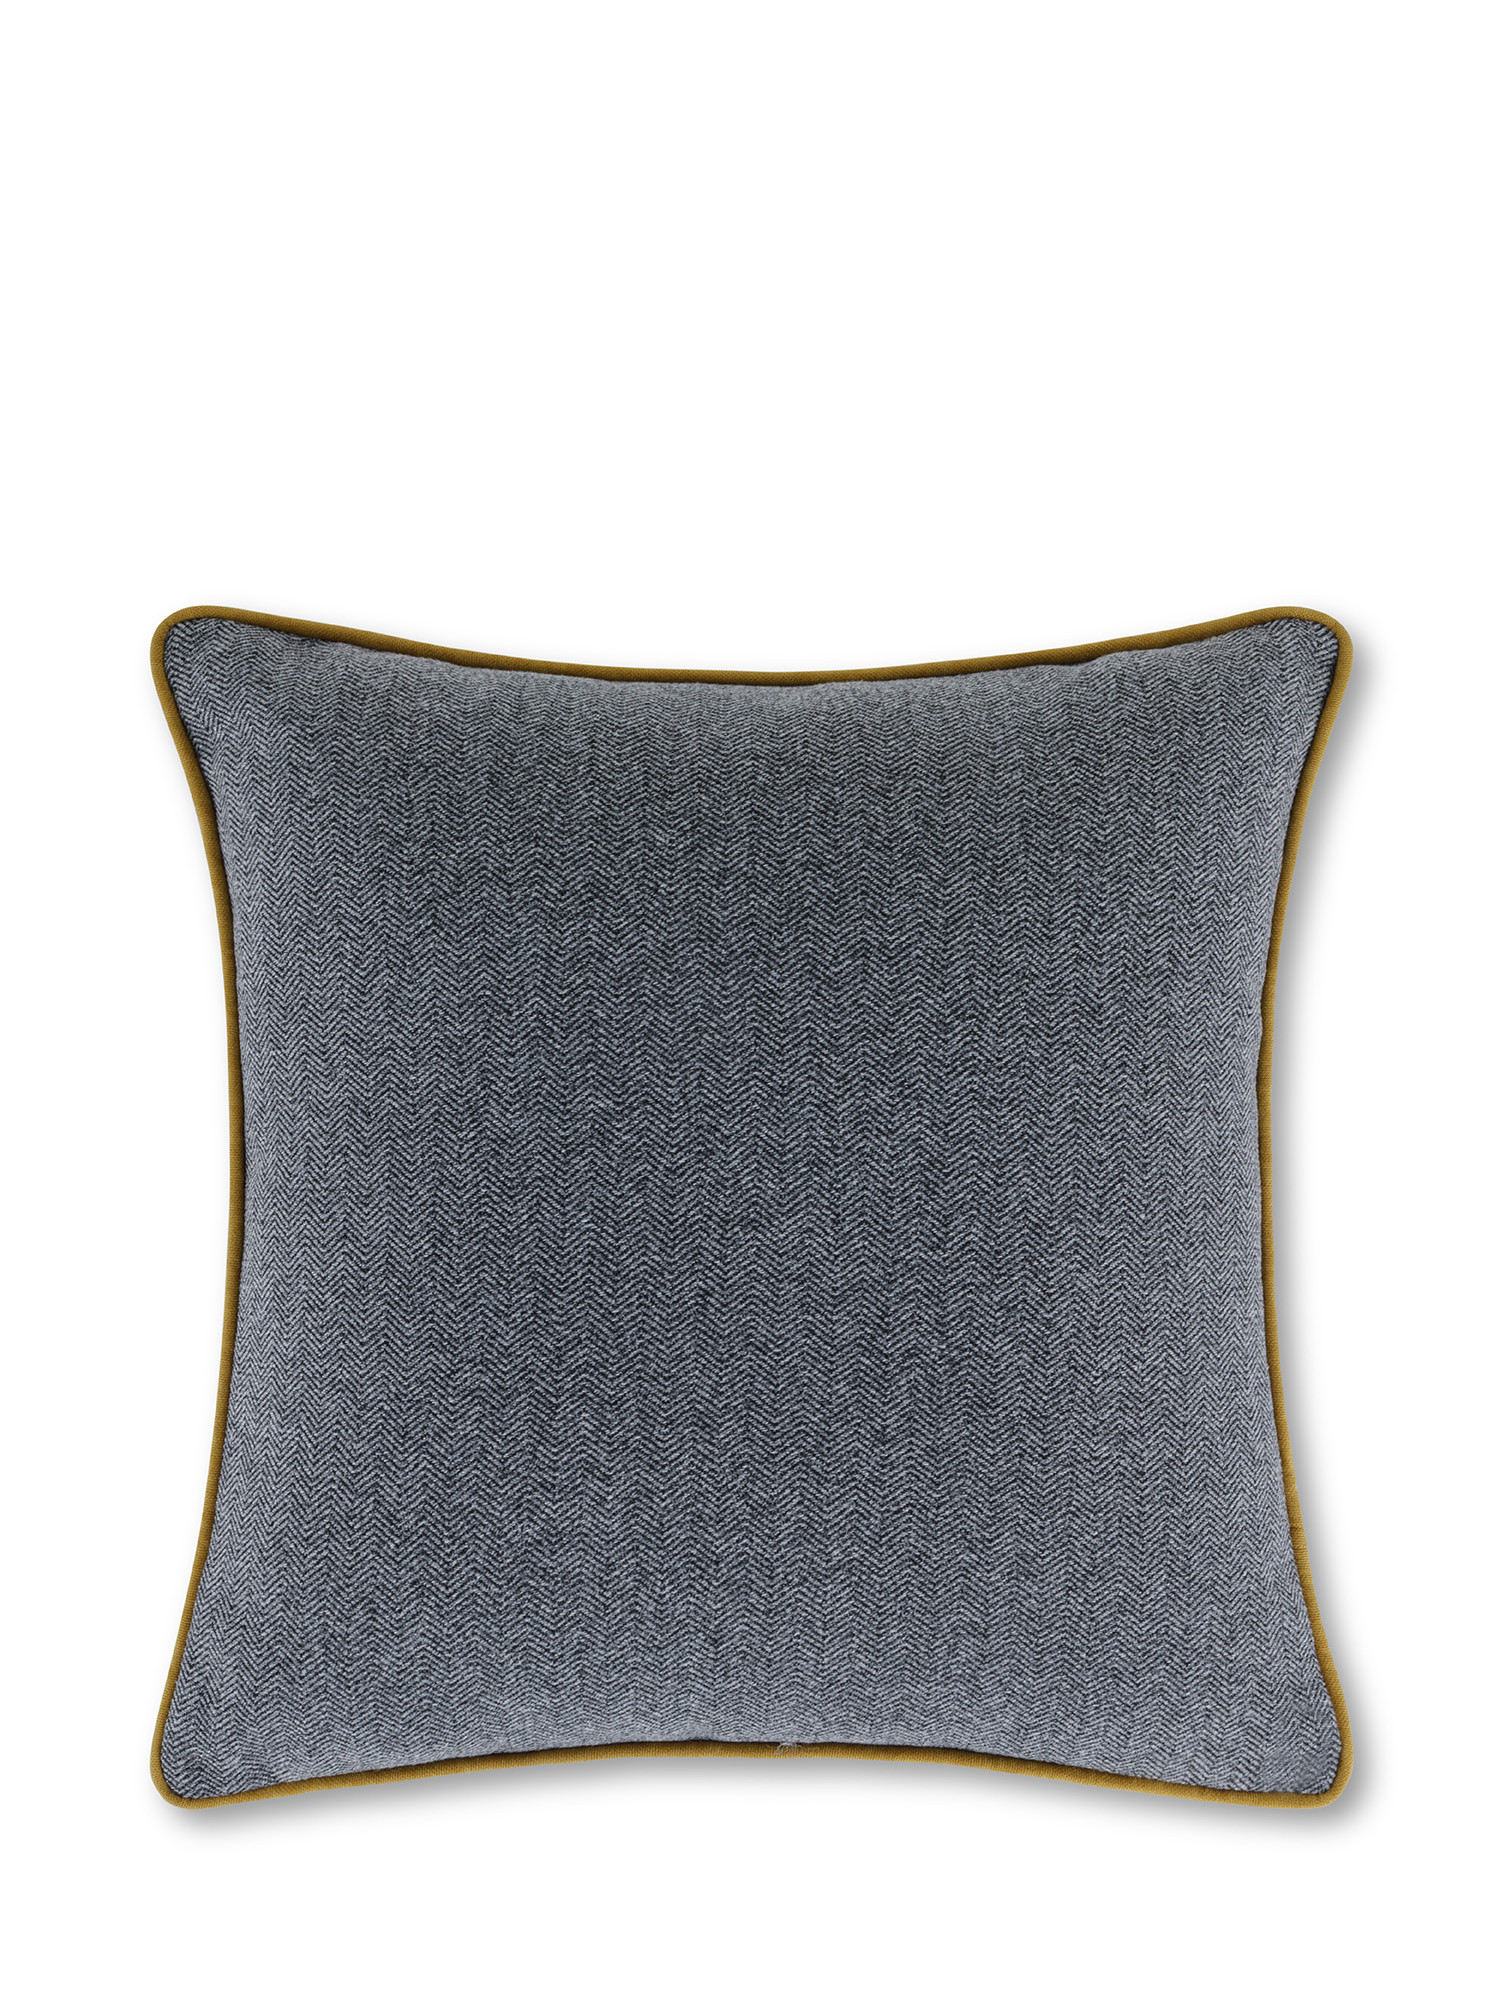 Cuscino in tessuto effetto Tweed a Spina di Pesce 45x45 cm, Grigio, large image number 0